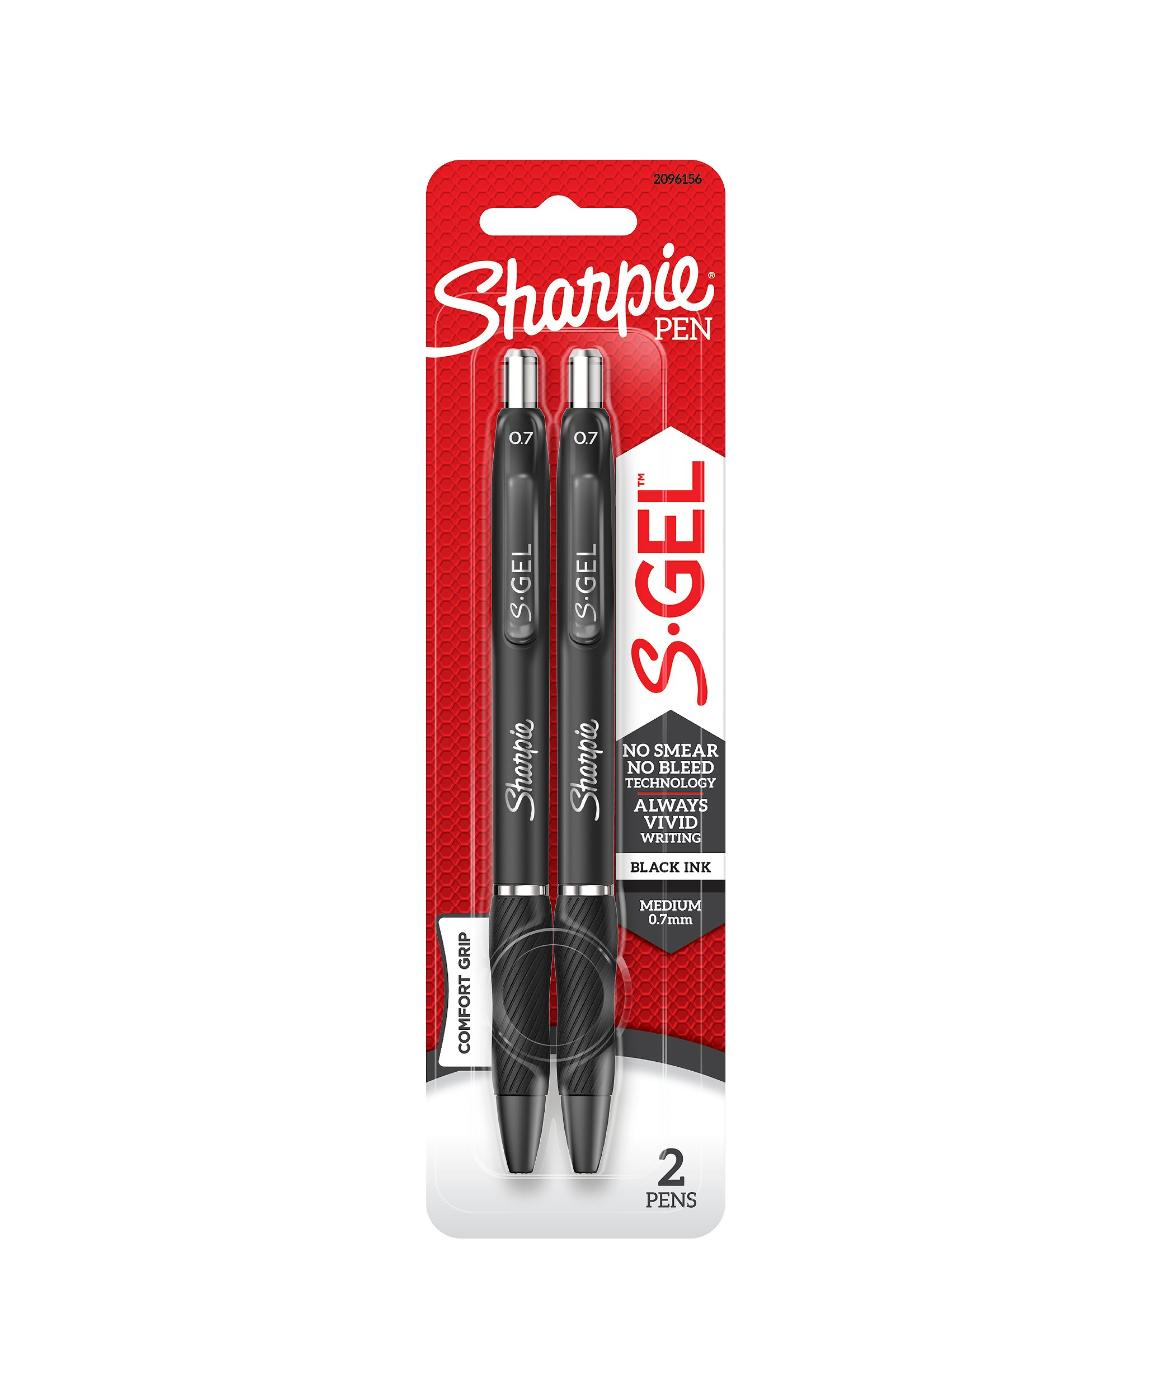 Sharpie® S-Gel™ Comfort Grip Gel Pen - Black, 4 pk - Kroger